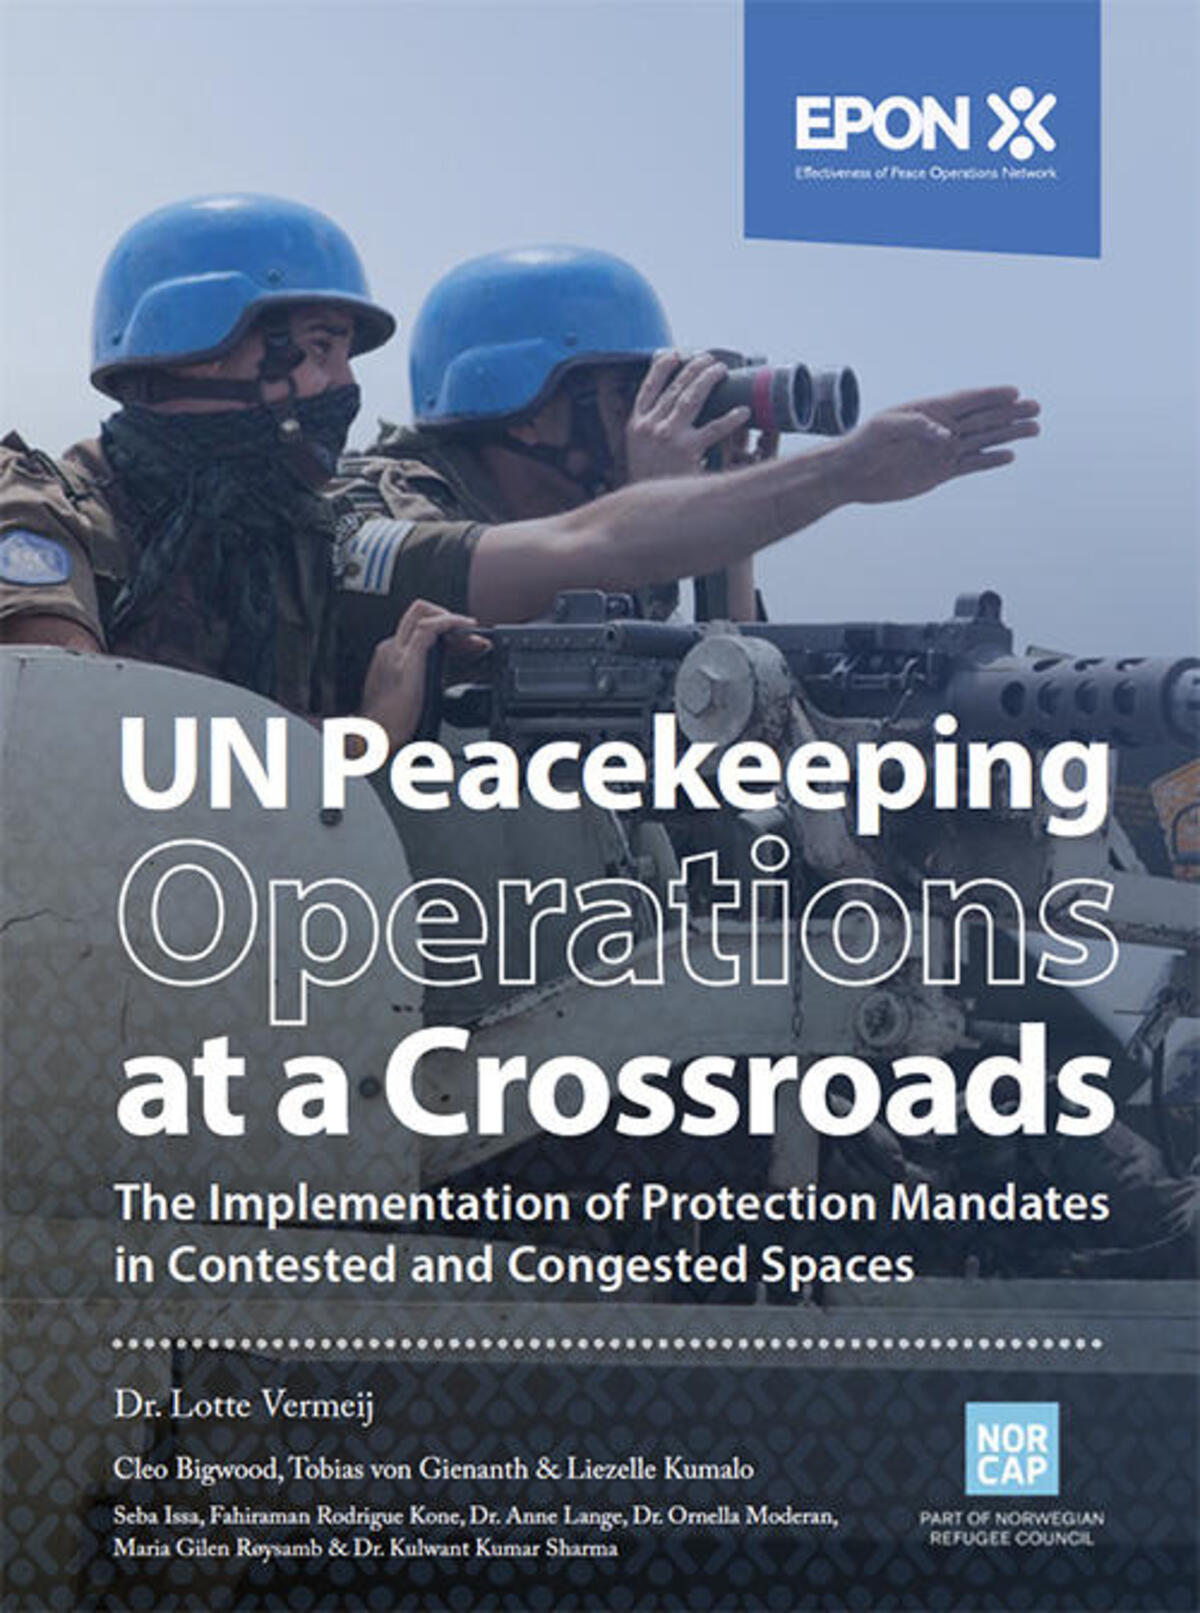 https://www.nrc.no/image/203367/un-peacekeeping-operations-at-a-crossroads.jpg?width=1200&height=1613&focalPoints=MTIwOCw5MTE=